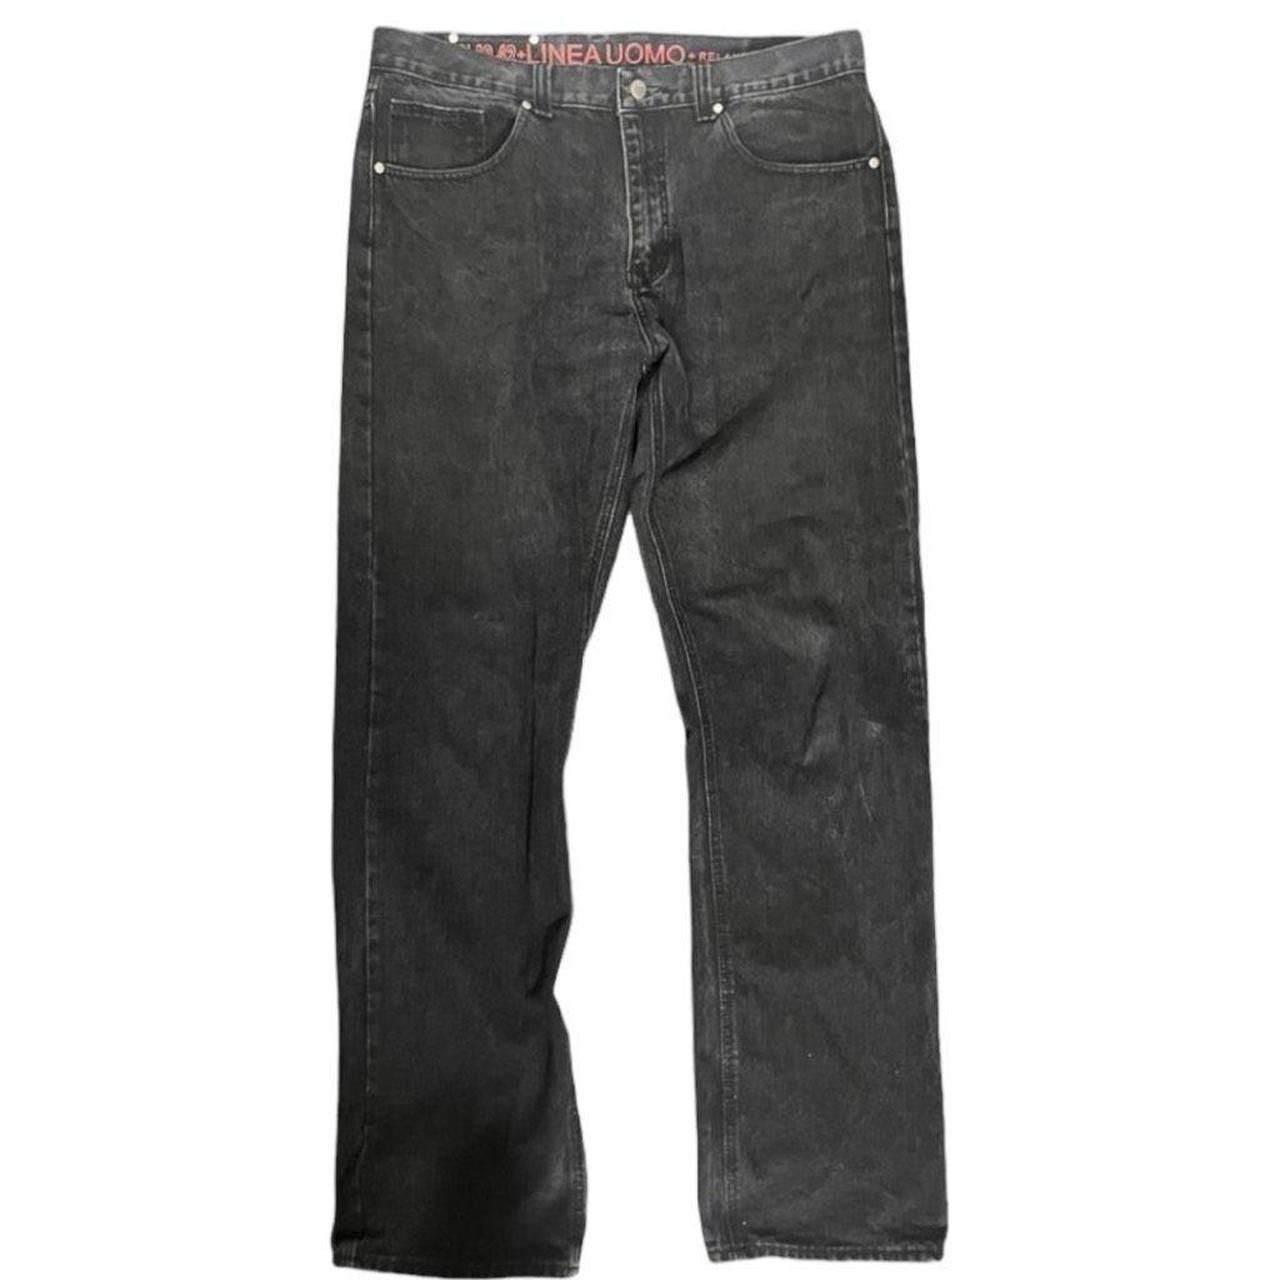 Men's Linea Uomo Jeans Black 5 pocket, relaxed - Depop